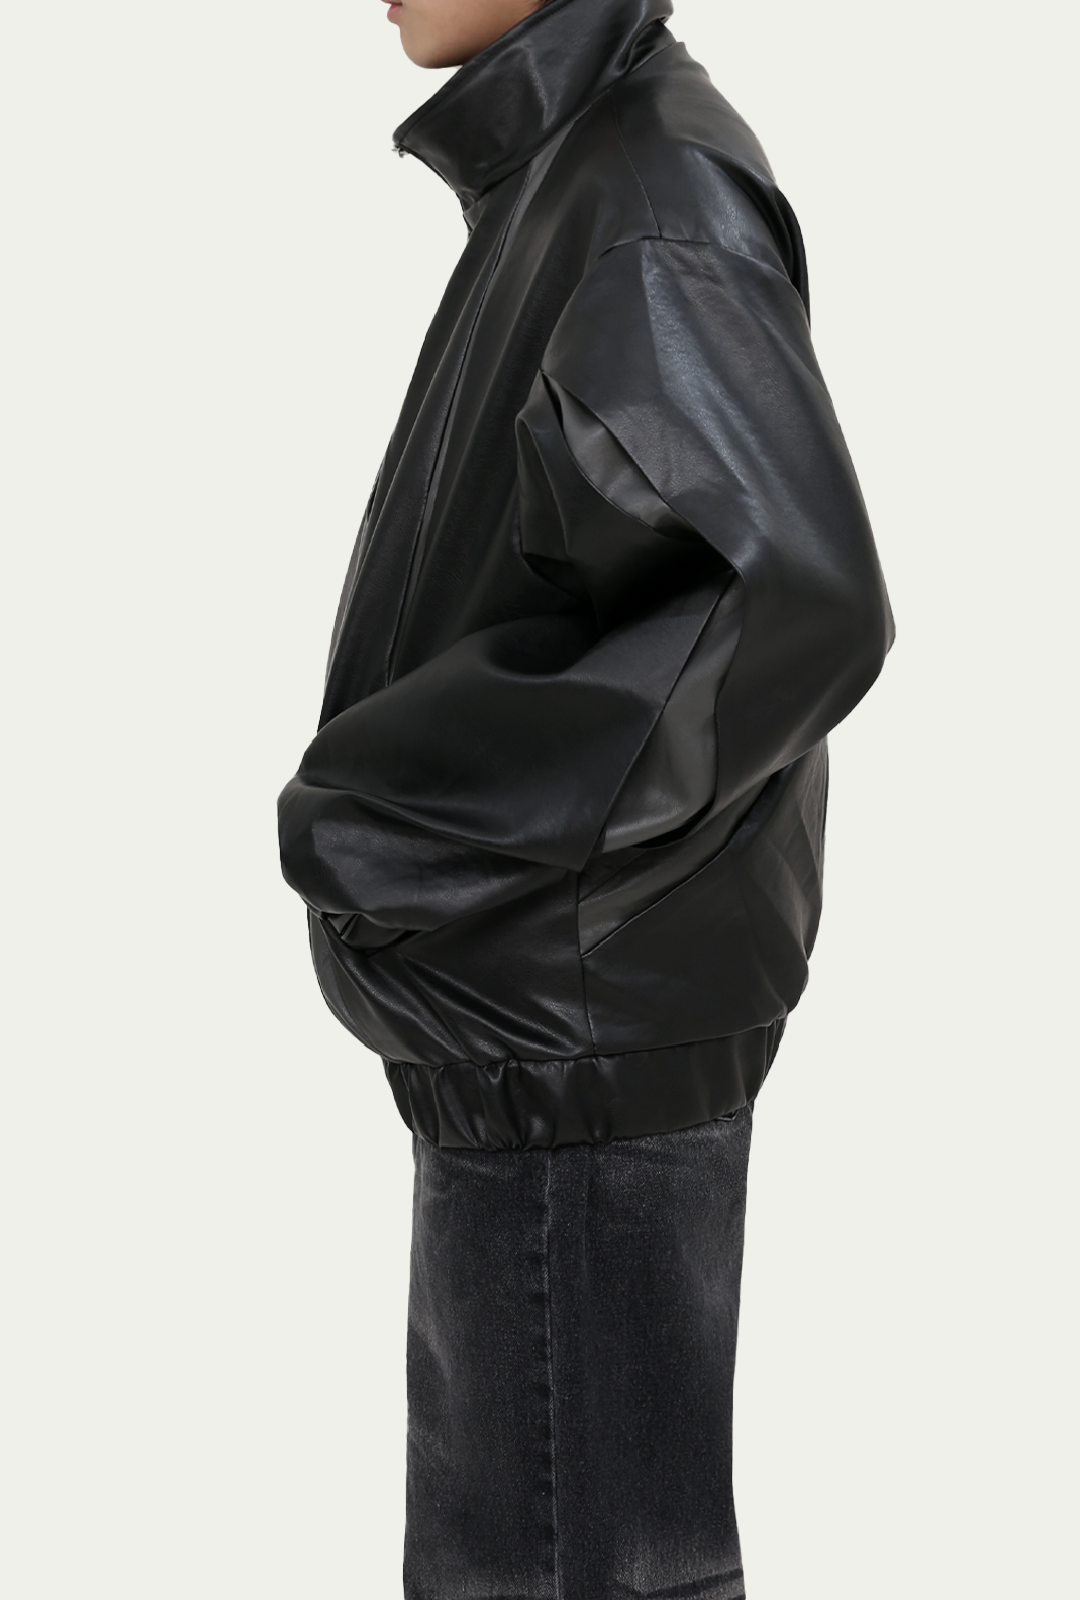 Clover Leather Jacket